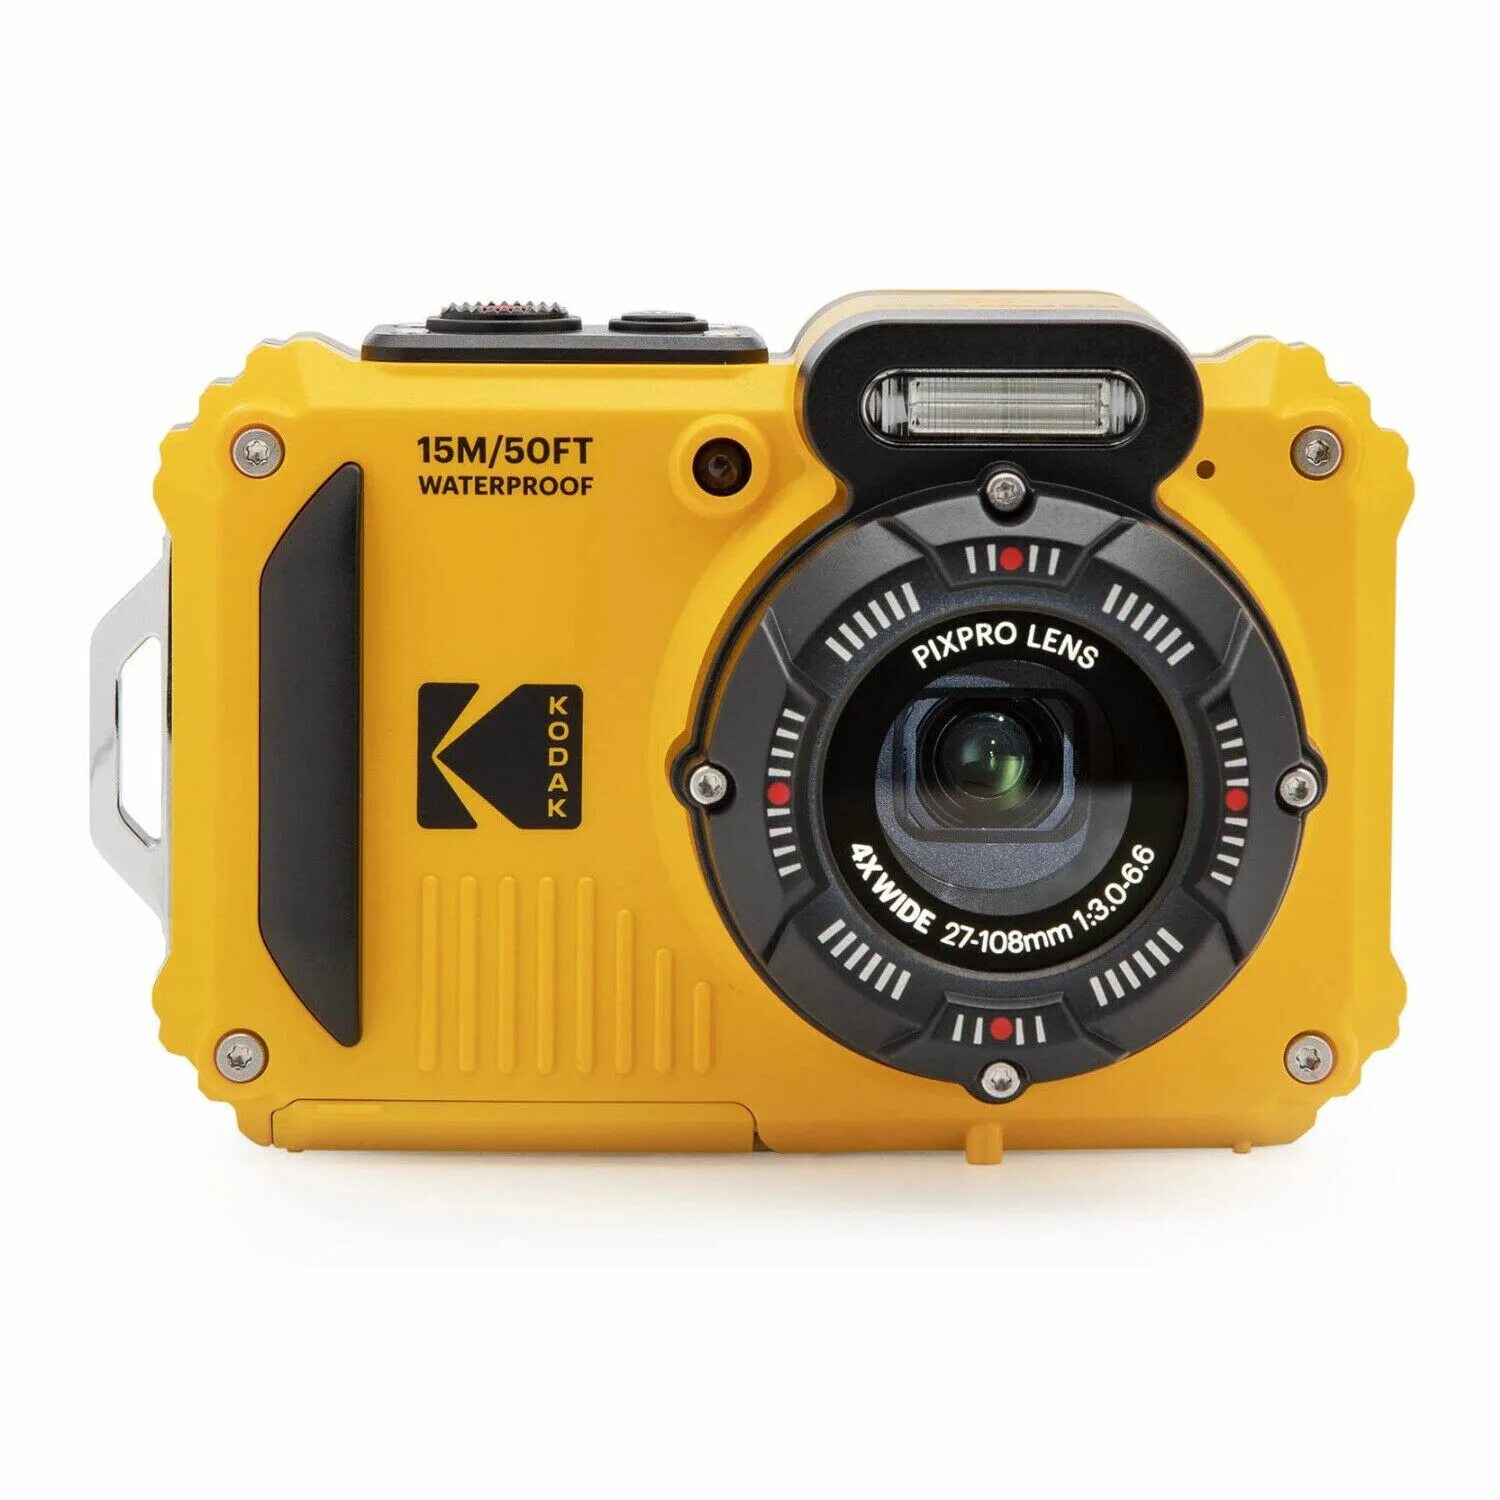 Камера Кодак. Компактный фотоаппарат Kodak. Защищенный фотоаппарат. Водонепроницаемый фотоаппарат оранжевый Кодак.